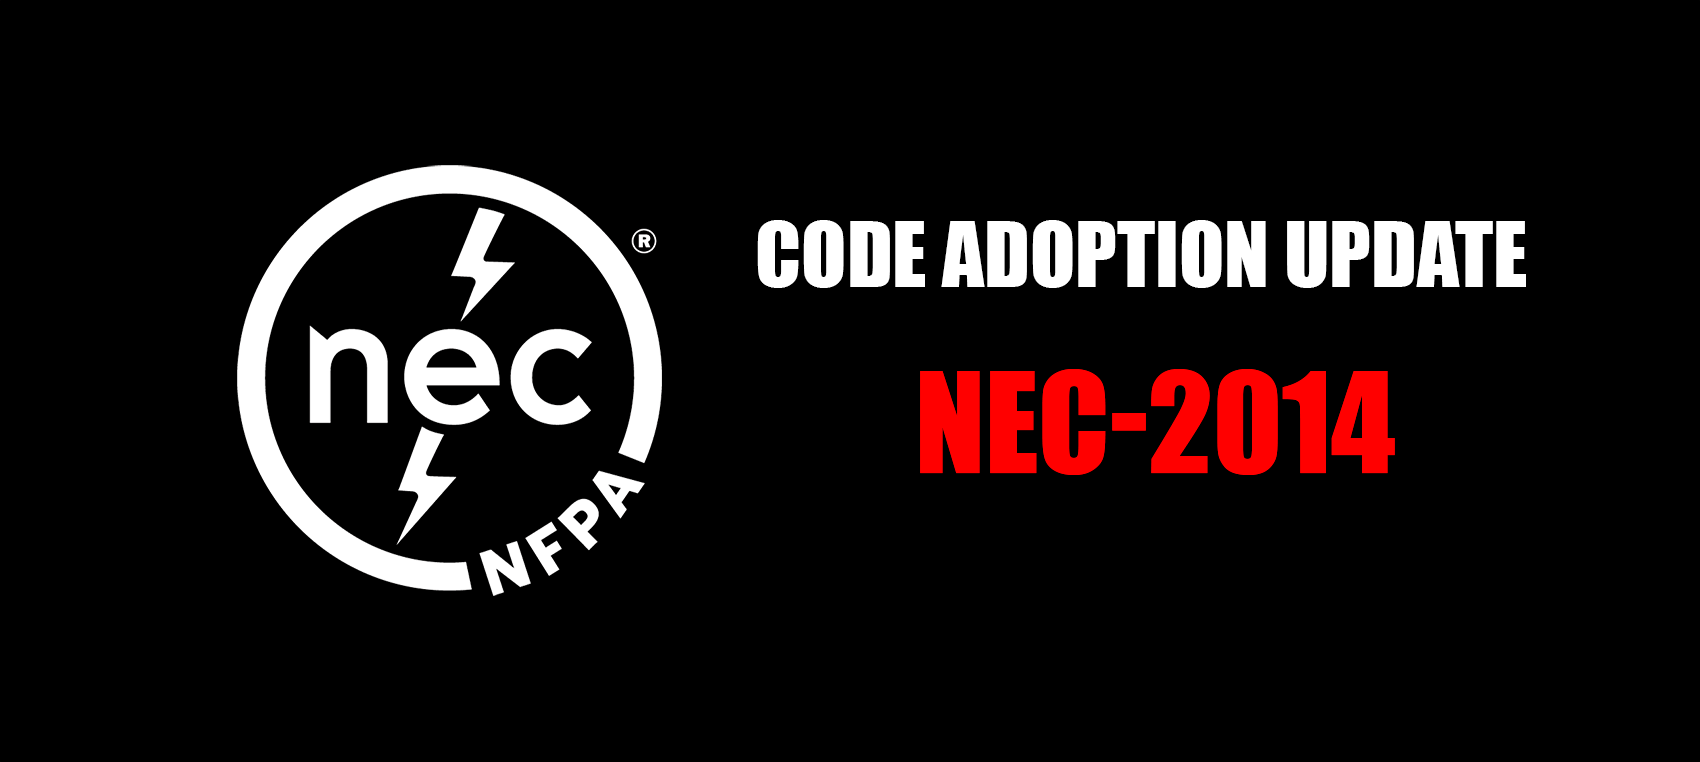 Adoptions of the 2014 NEC